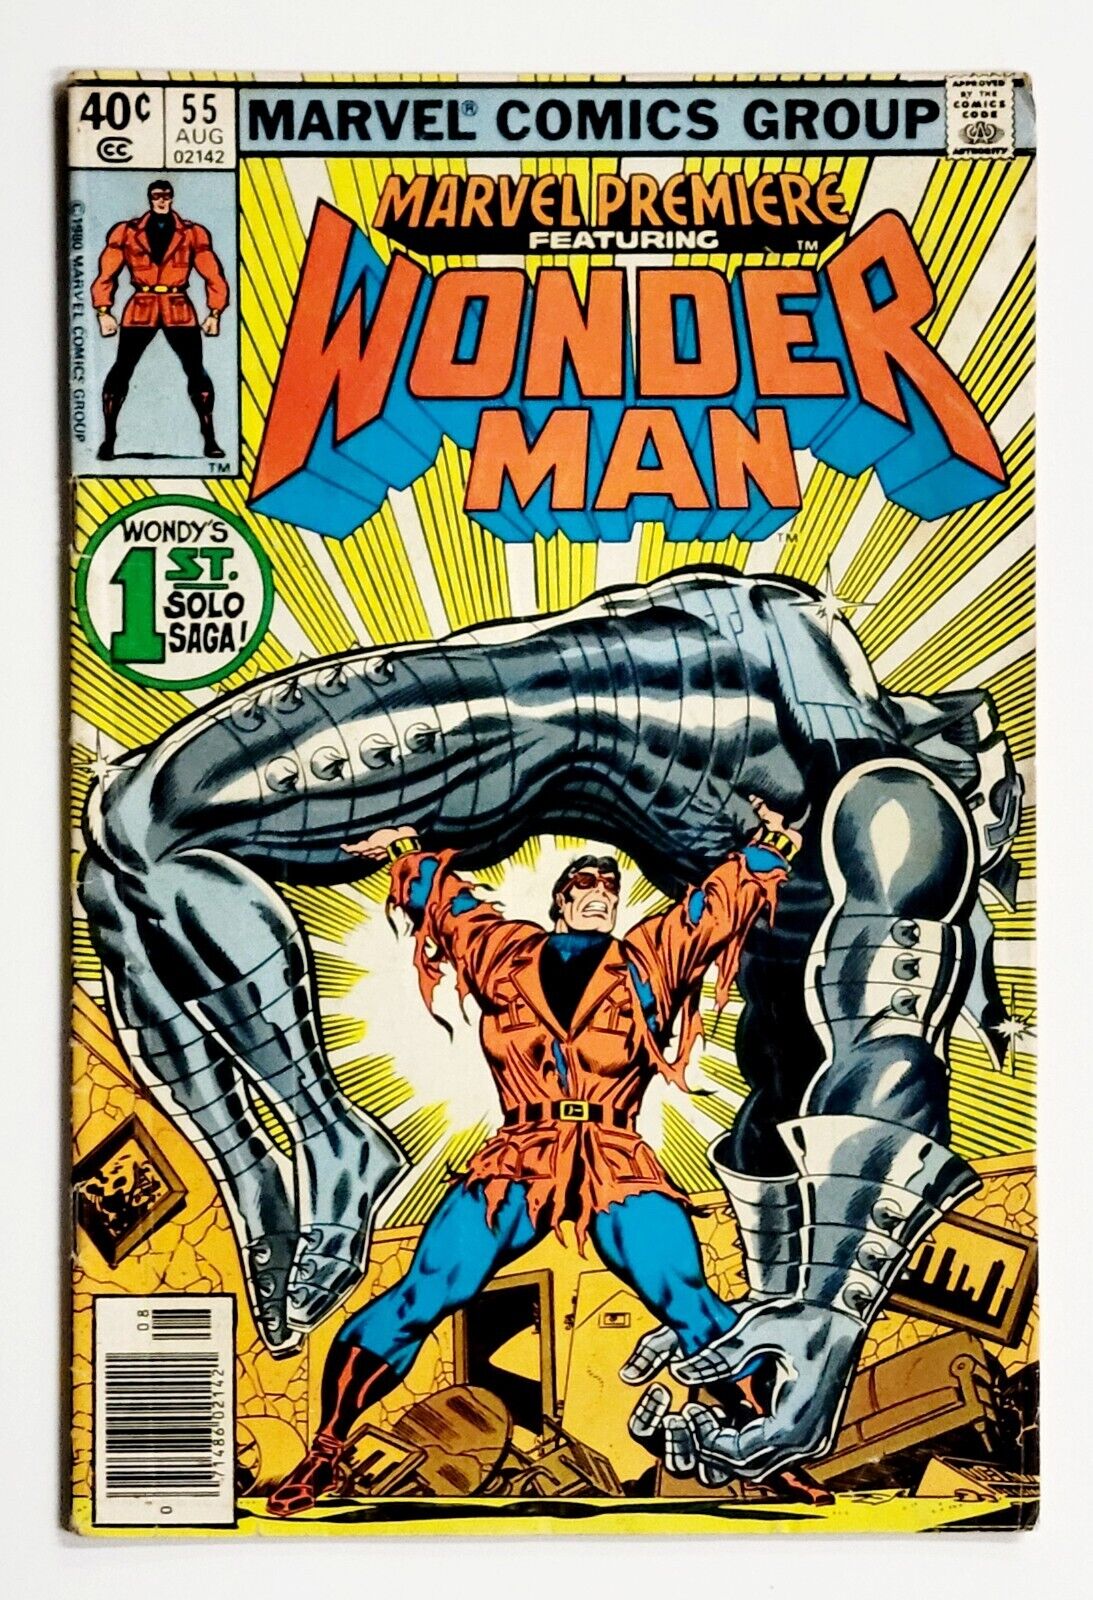 1980 WONDER MAN Marvel Comics Premiere #55  1st Appearance Solo Saga Newstand Ed